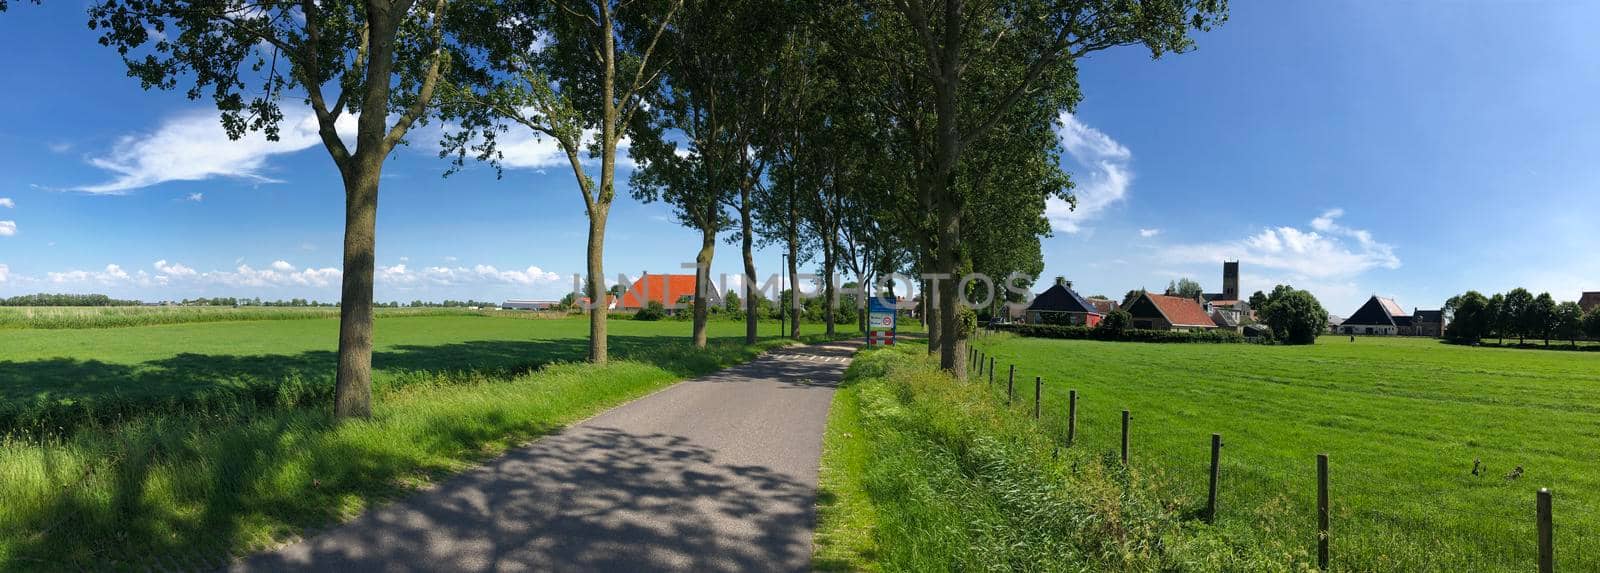 Panorama from the village Schraard in Friesland, The Netherlands